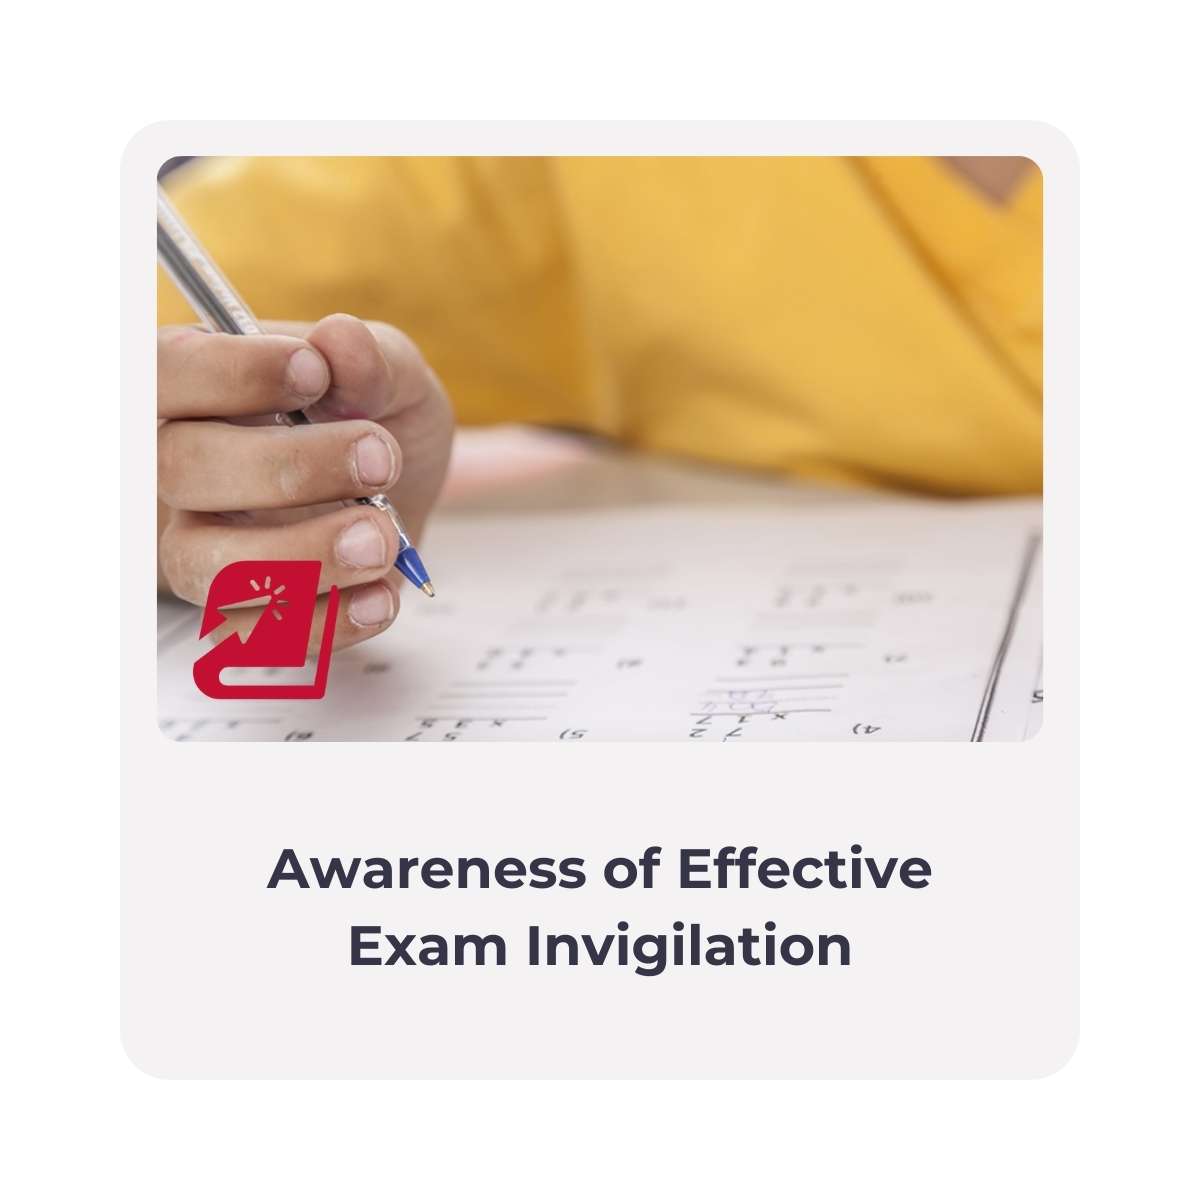 Awareness of Effective Exam Invigilation